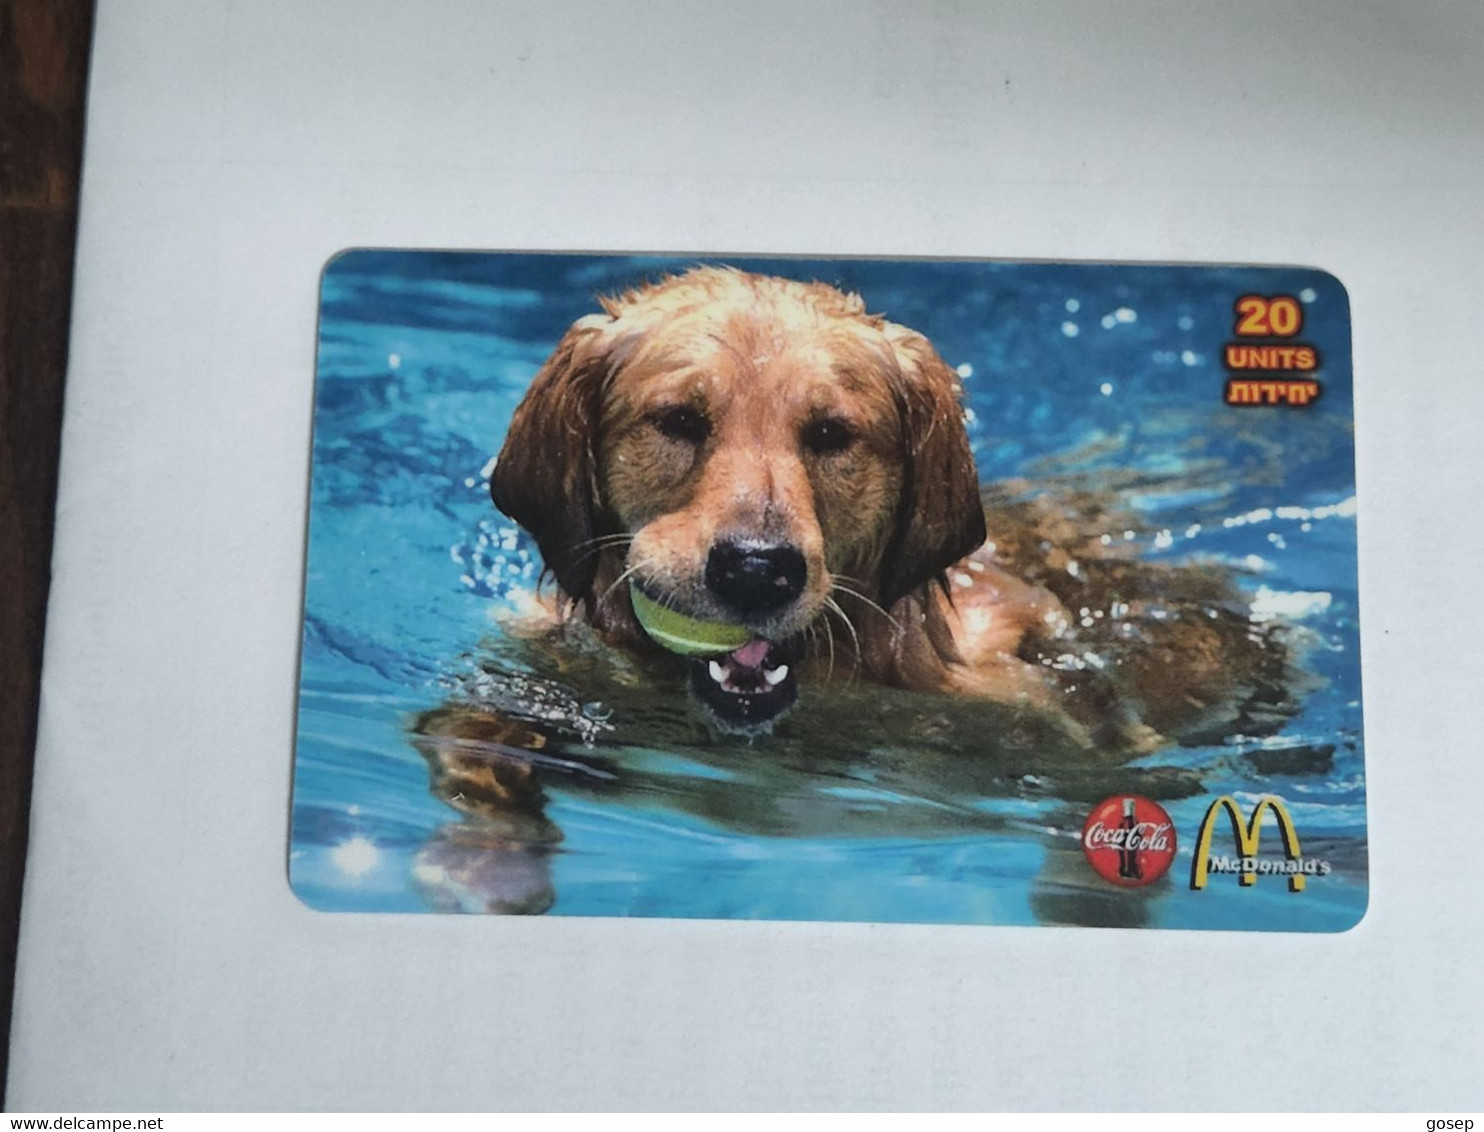 Israel-mcDonald's-coca Cola-DOG-(20units)-(2)-(tirage-154/500)-(62730281)-(31.5.2002)-used Card - Honden